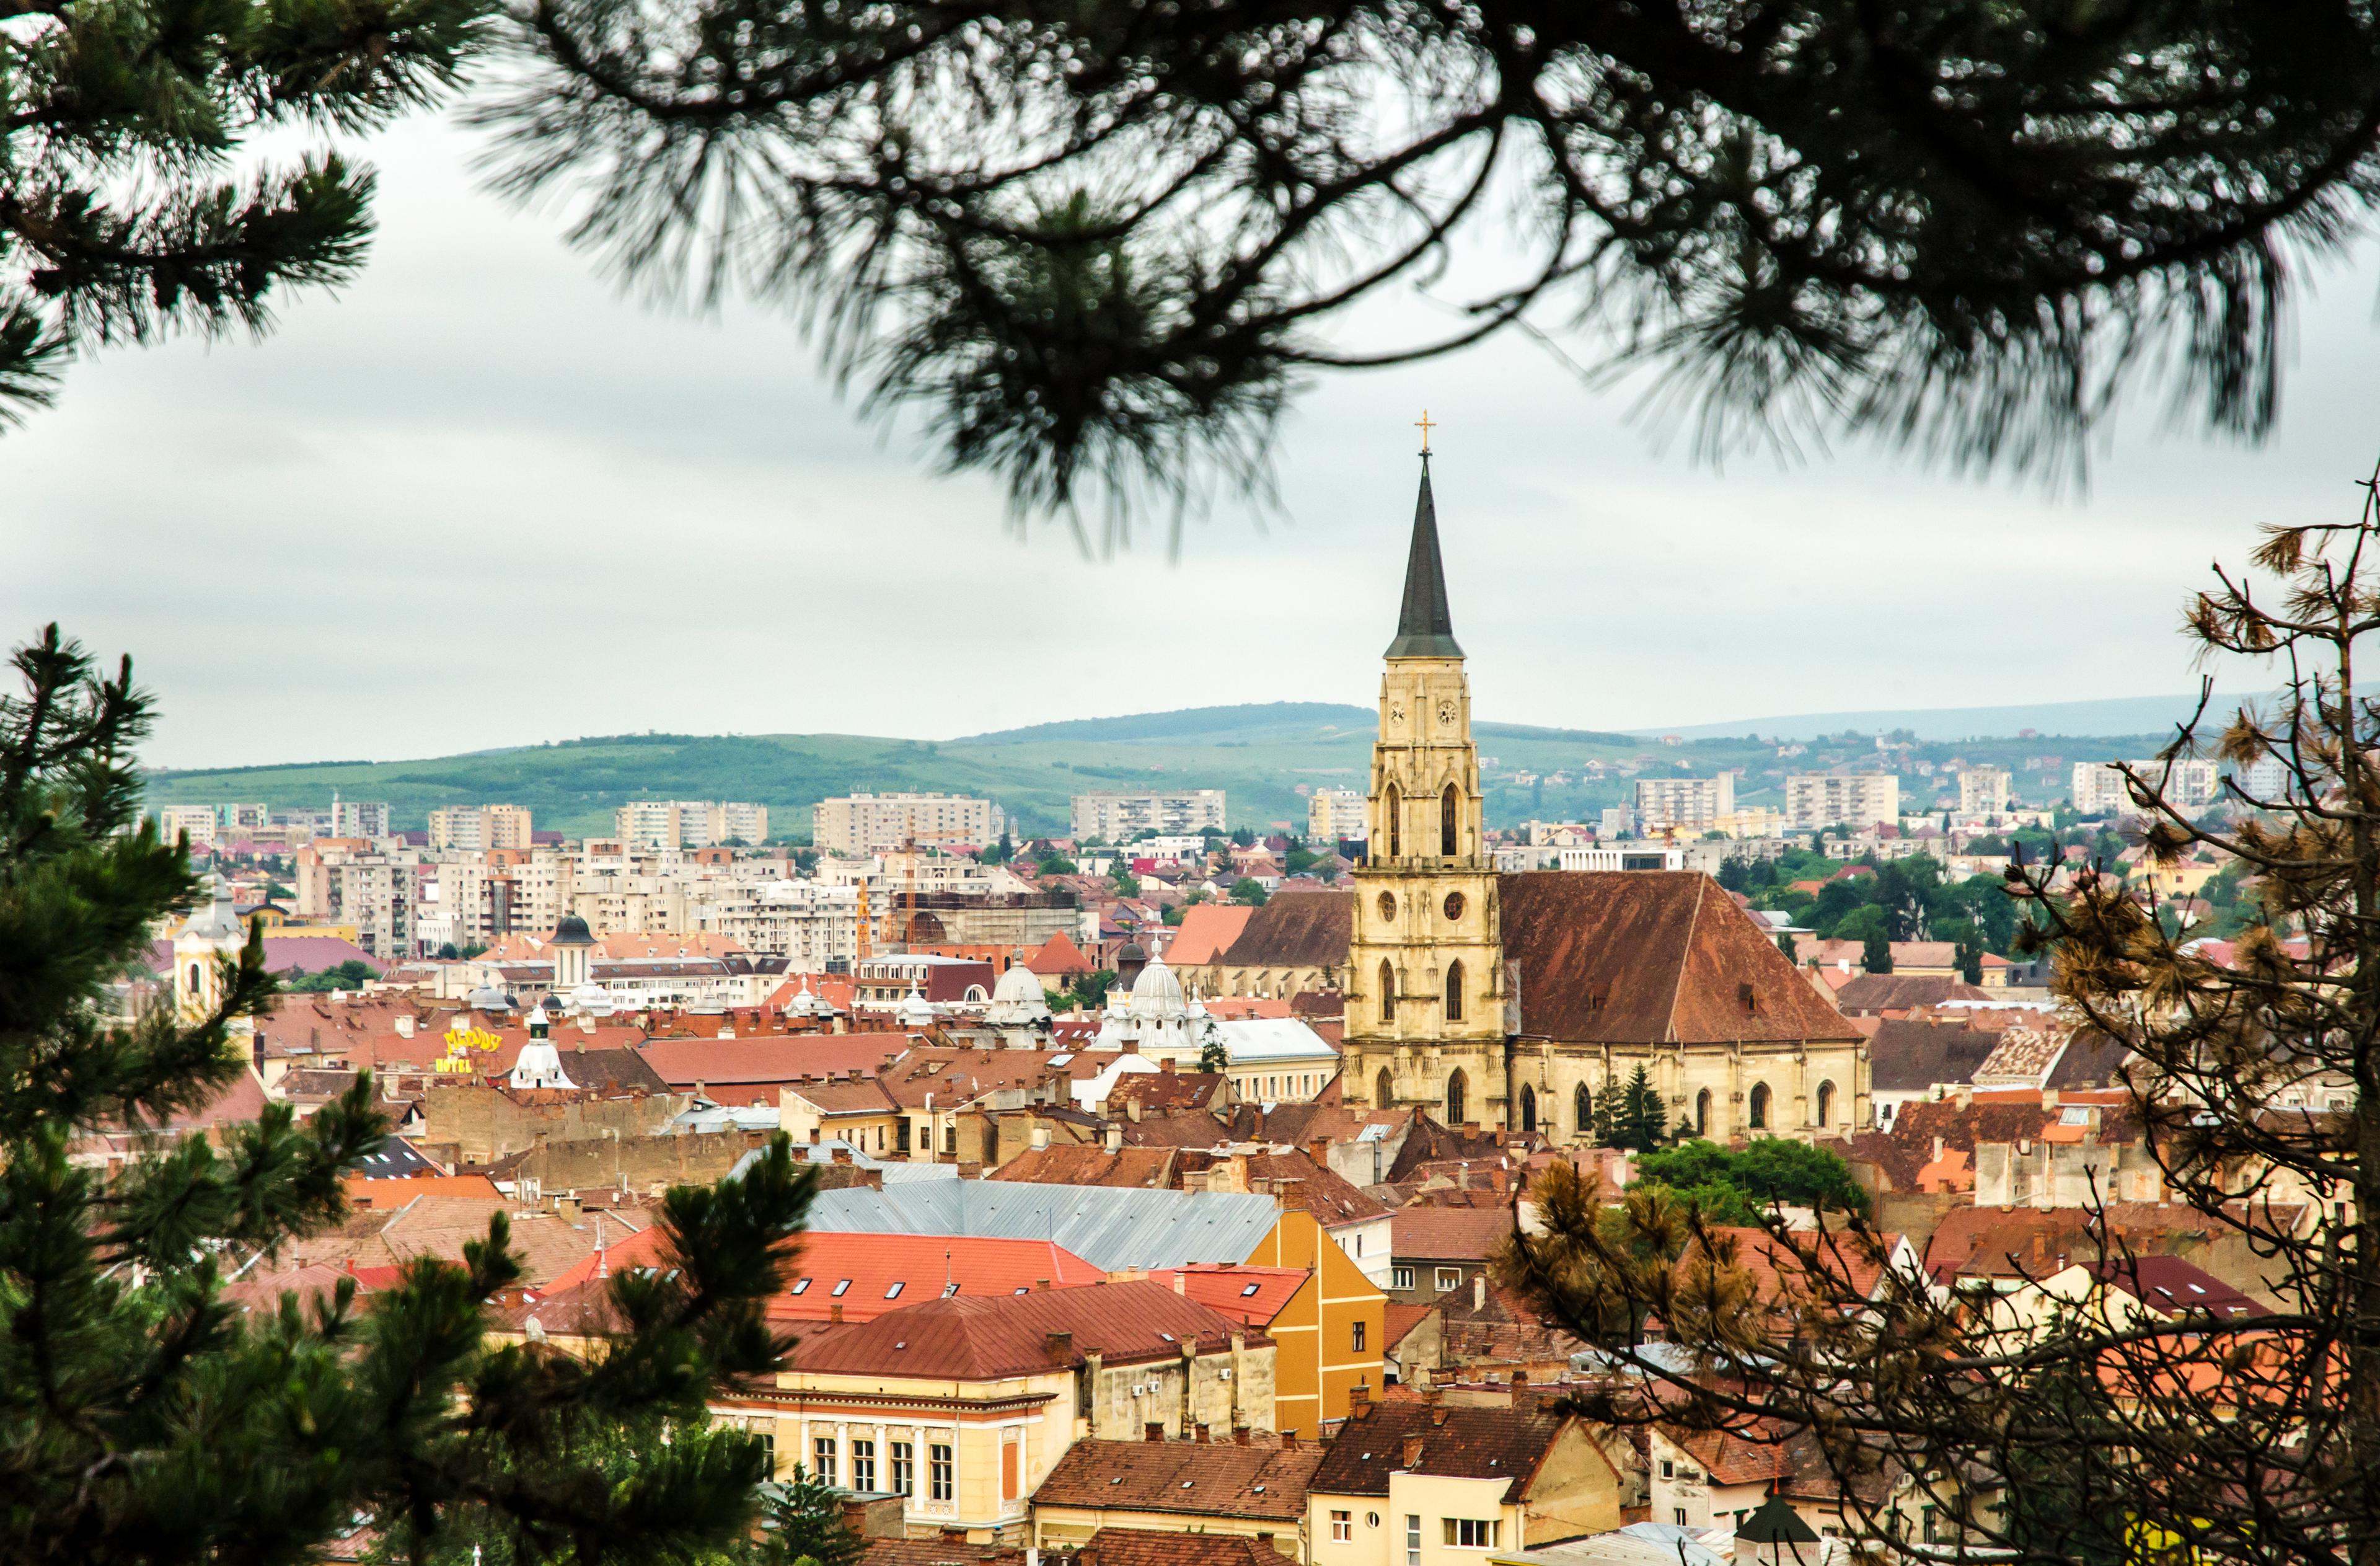 The Cluj-Napoca city, cover photo